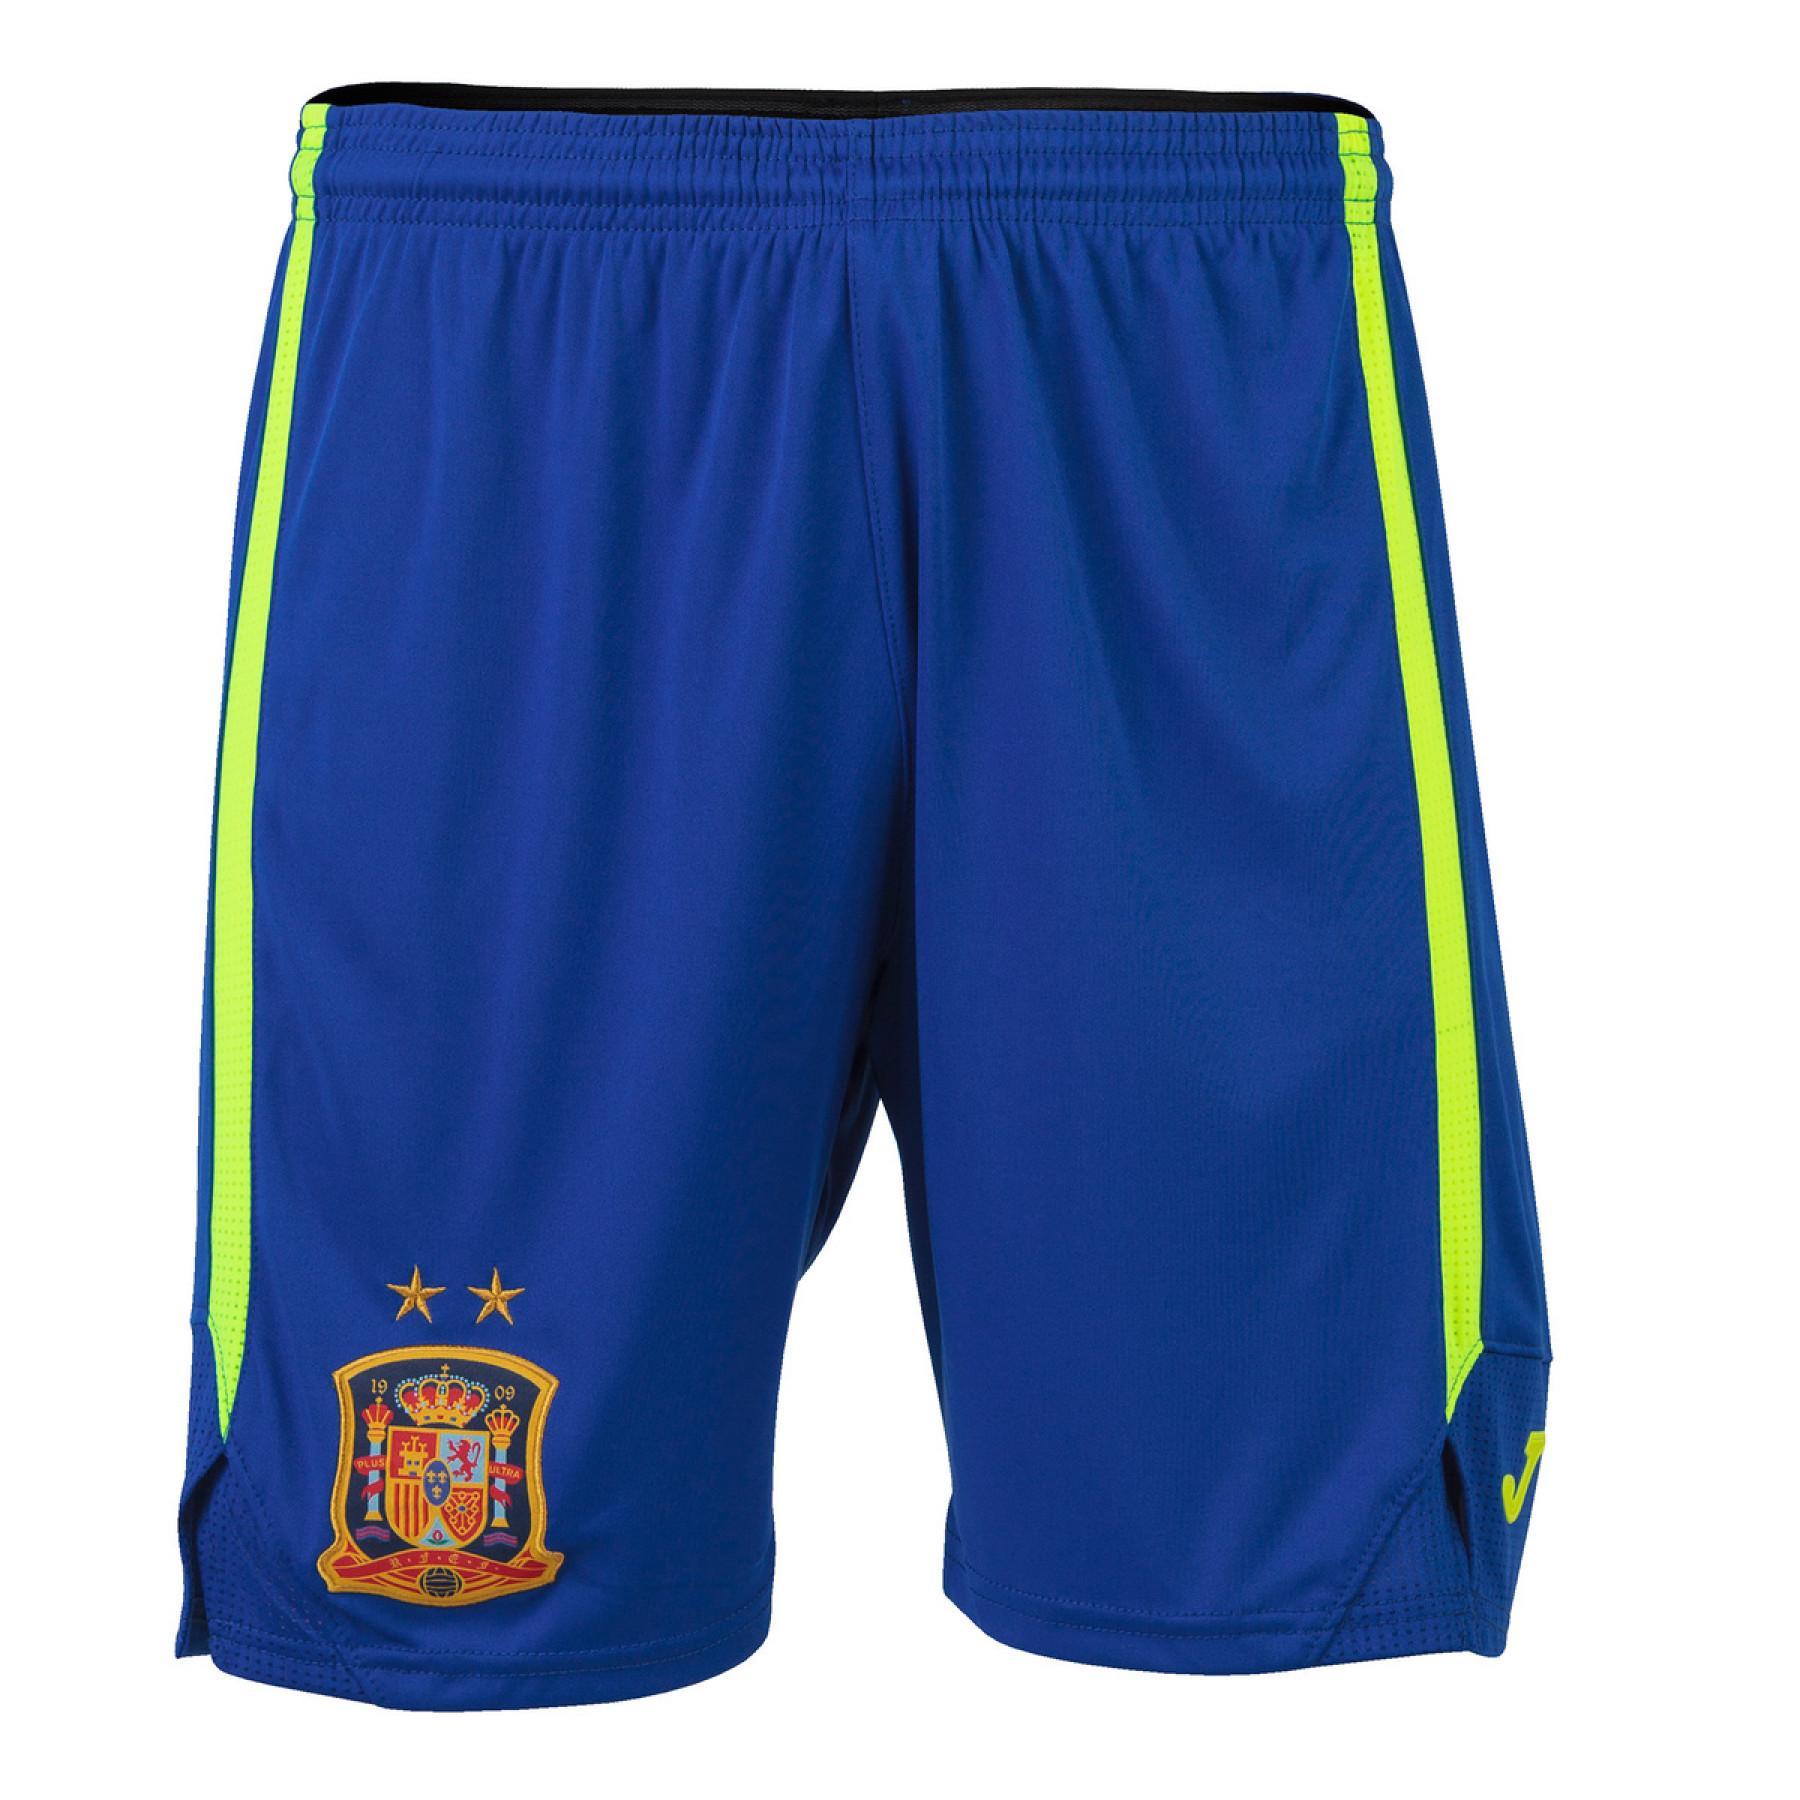 Home shorts Espagne Futsal 2020/21